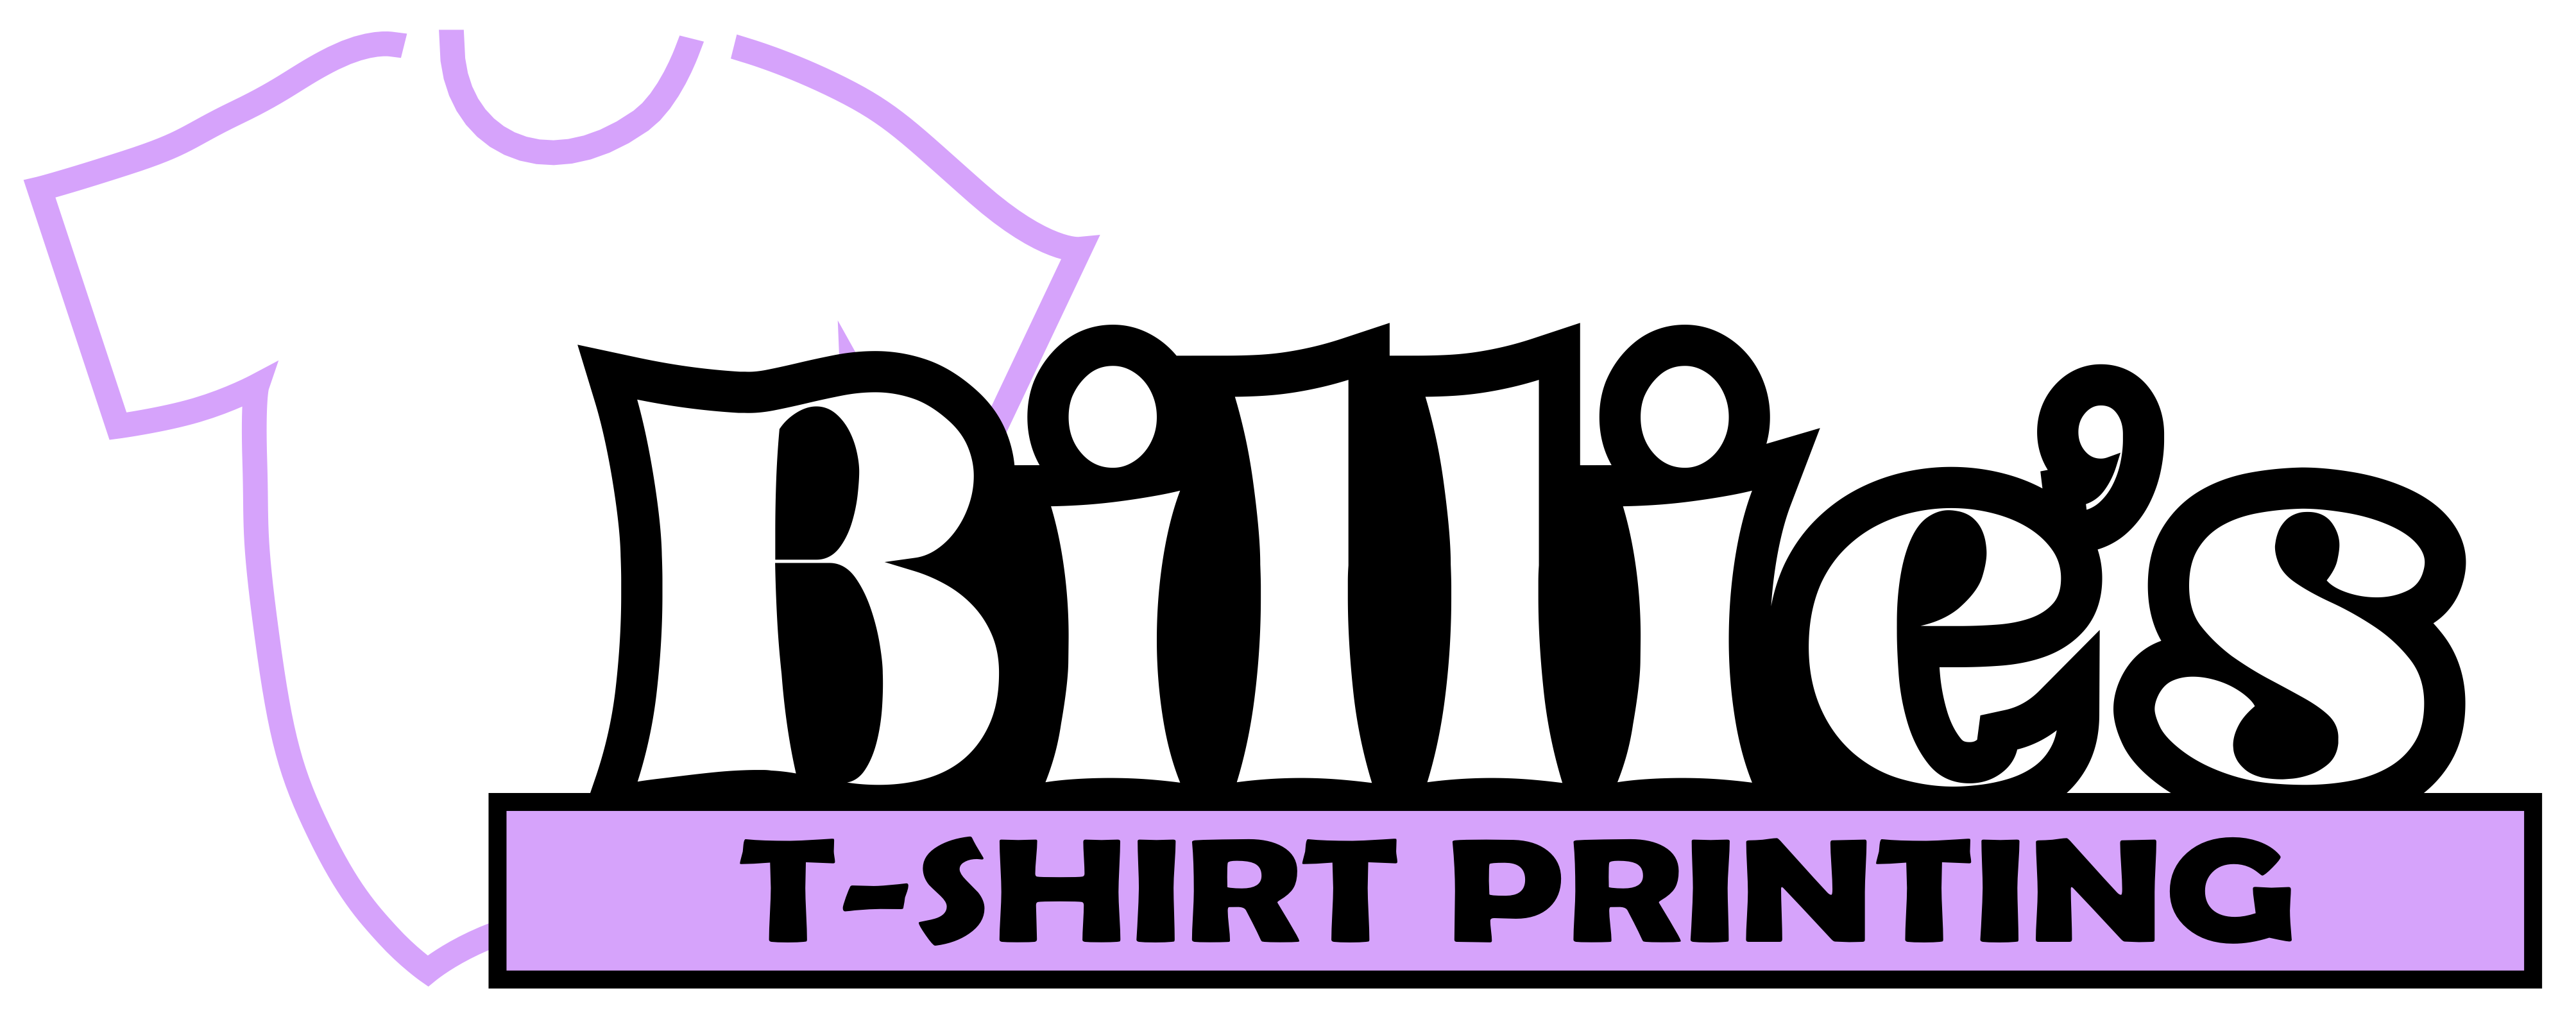 Billie's t-Shirt Printing